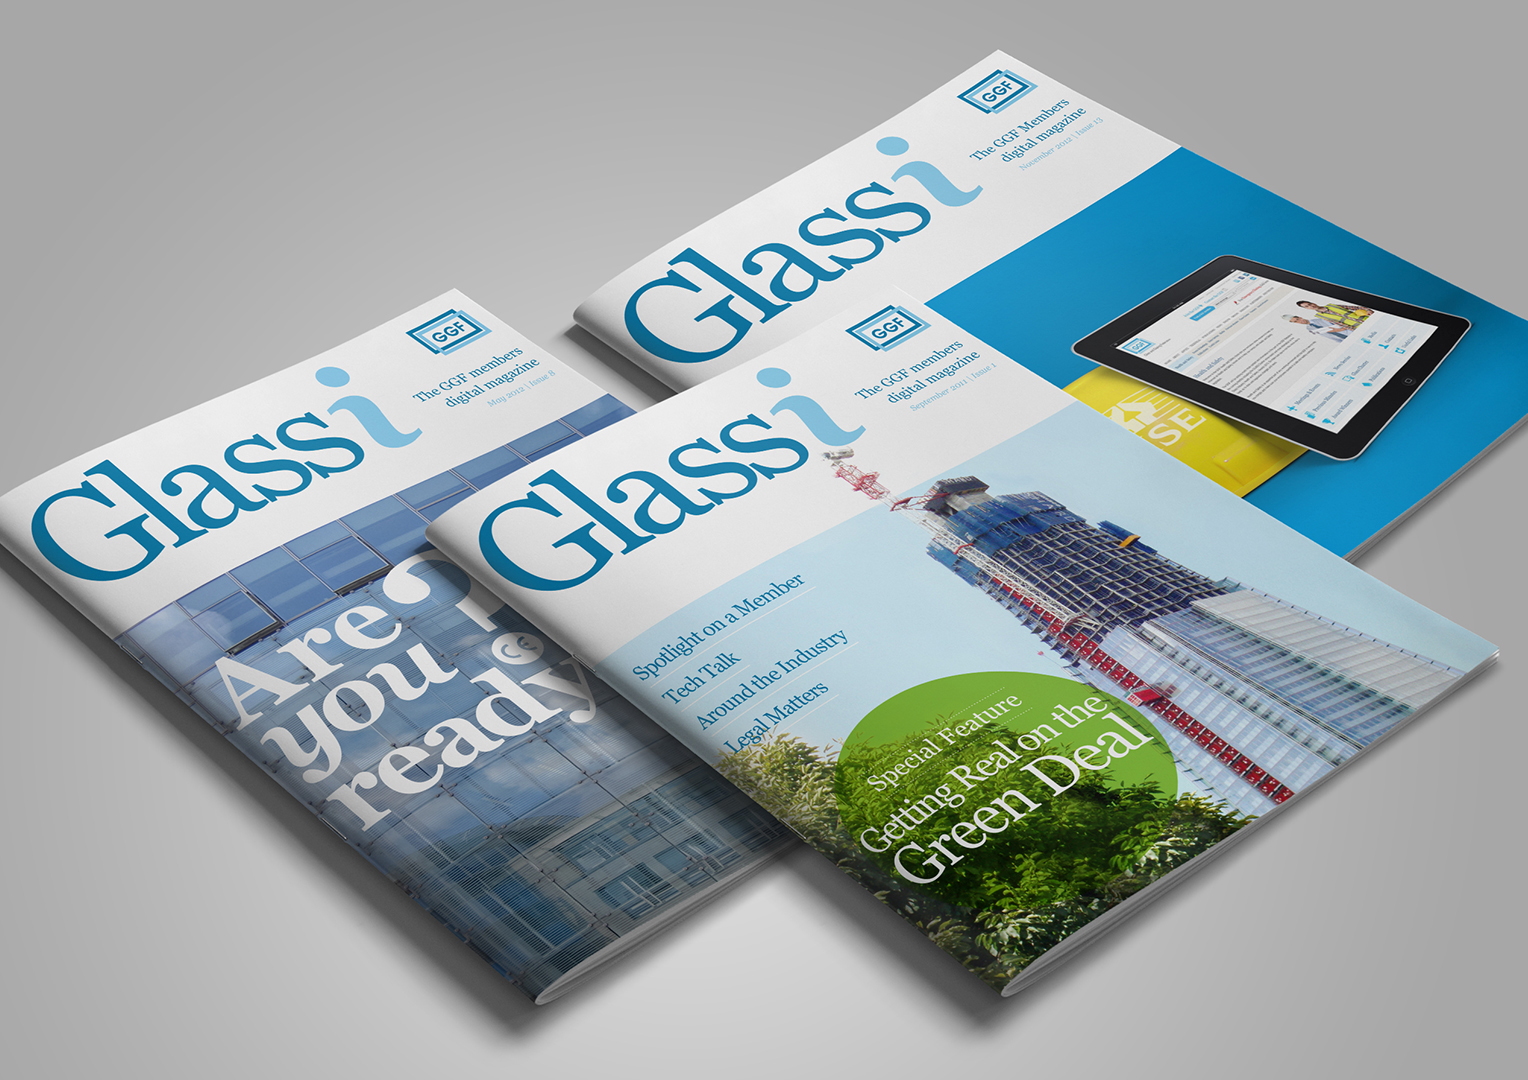 GGF The Glass and Glazing Federation. Glassi Digital Magazine. Creative artwork and graphic design.